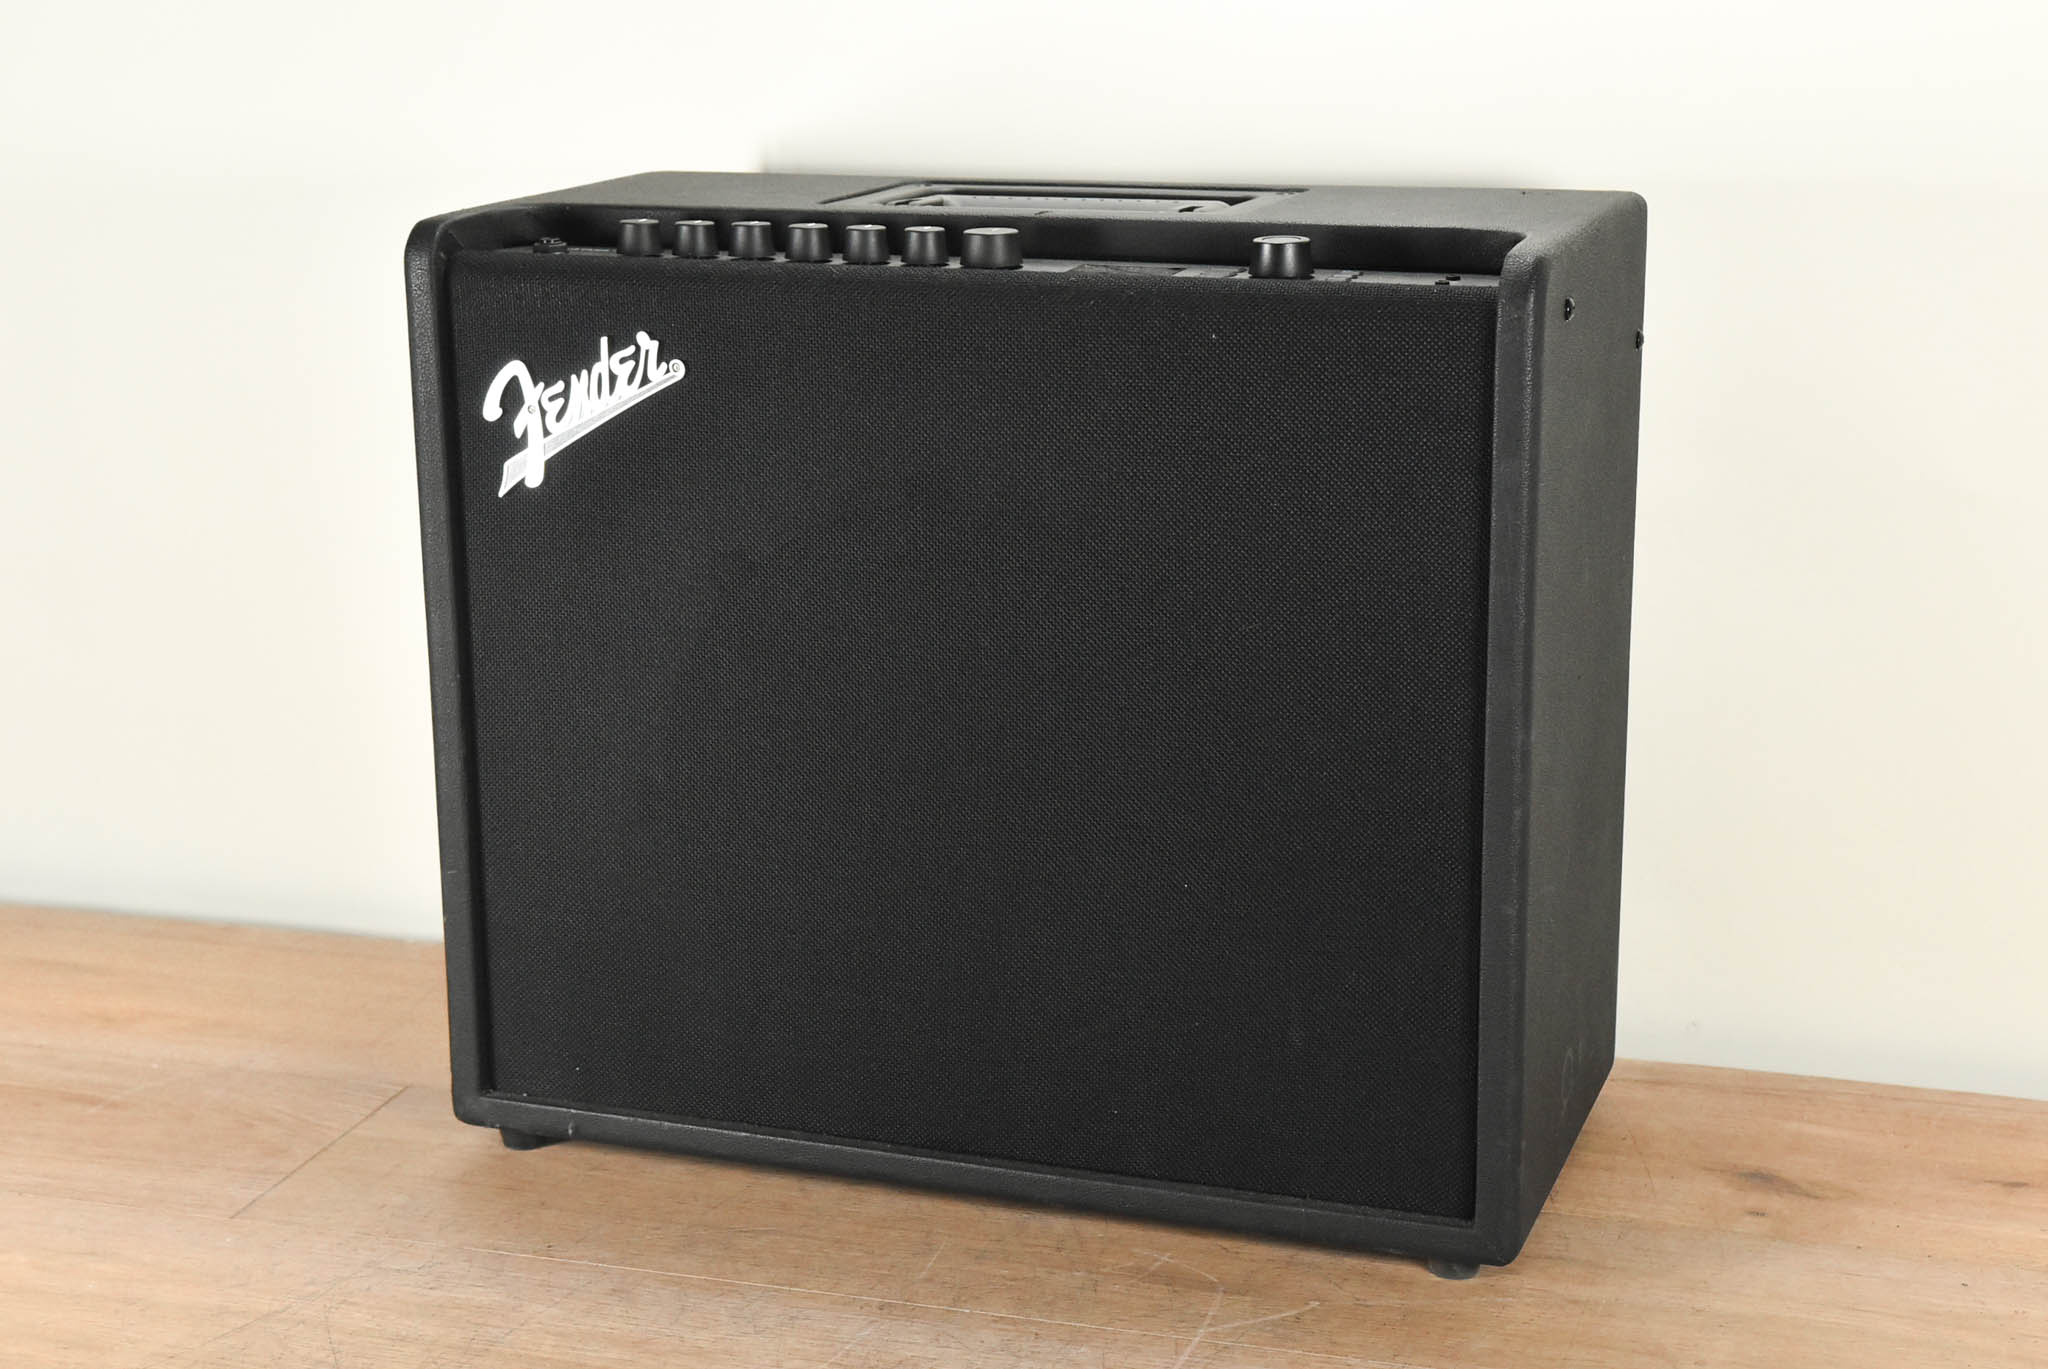 Fender Mustang GT100 100W 1x12" Modeling Guitar Amplifier